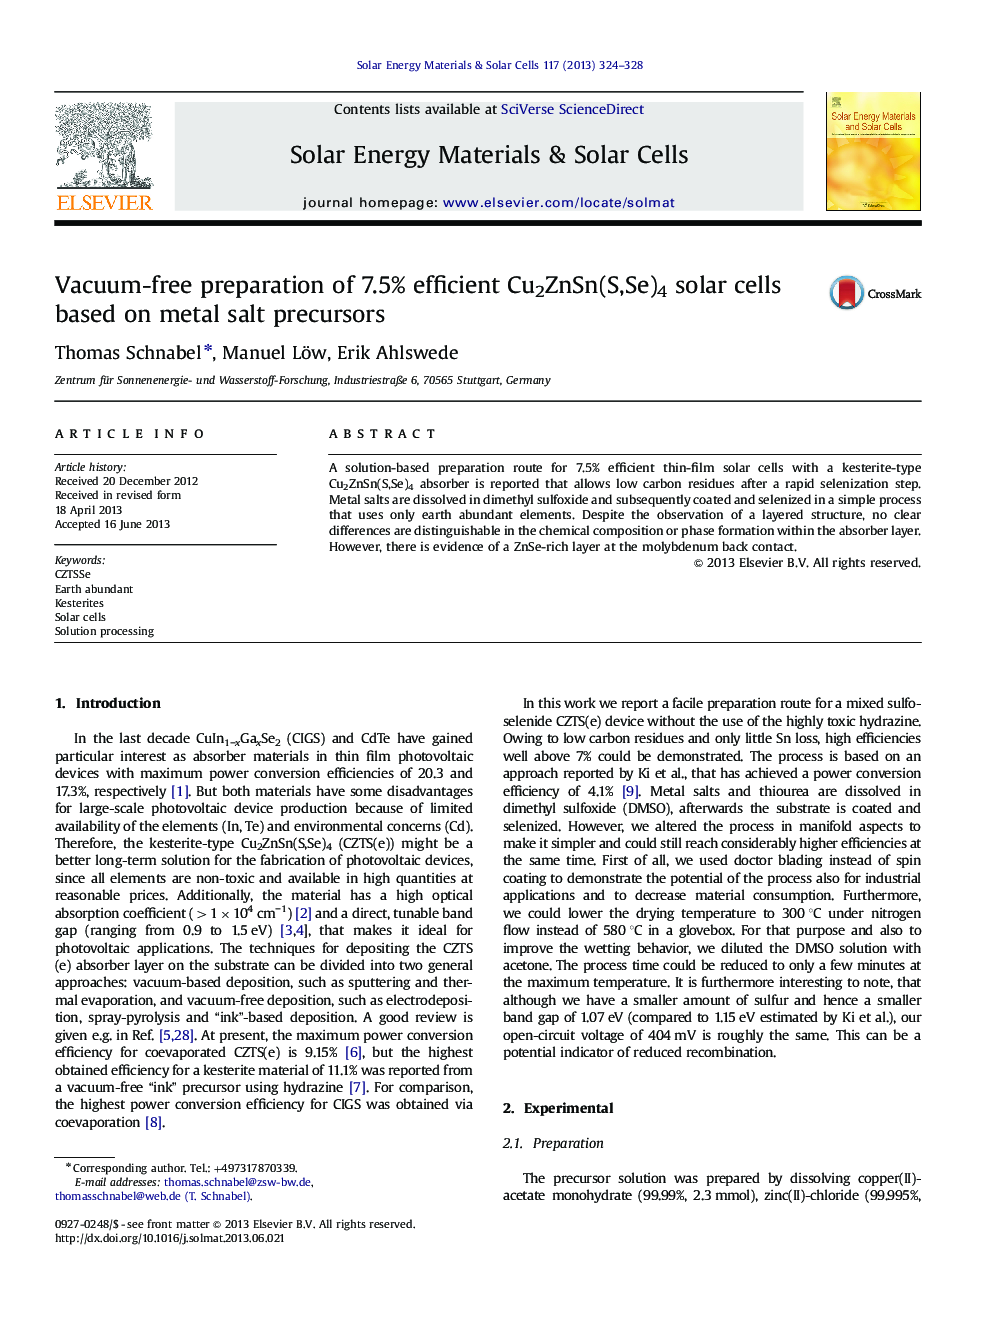 Vacuum-free preparation of 7.5% efficient Cu2ZnSn(S,Se)4 solar cells based on metal salt precursors